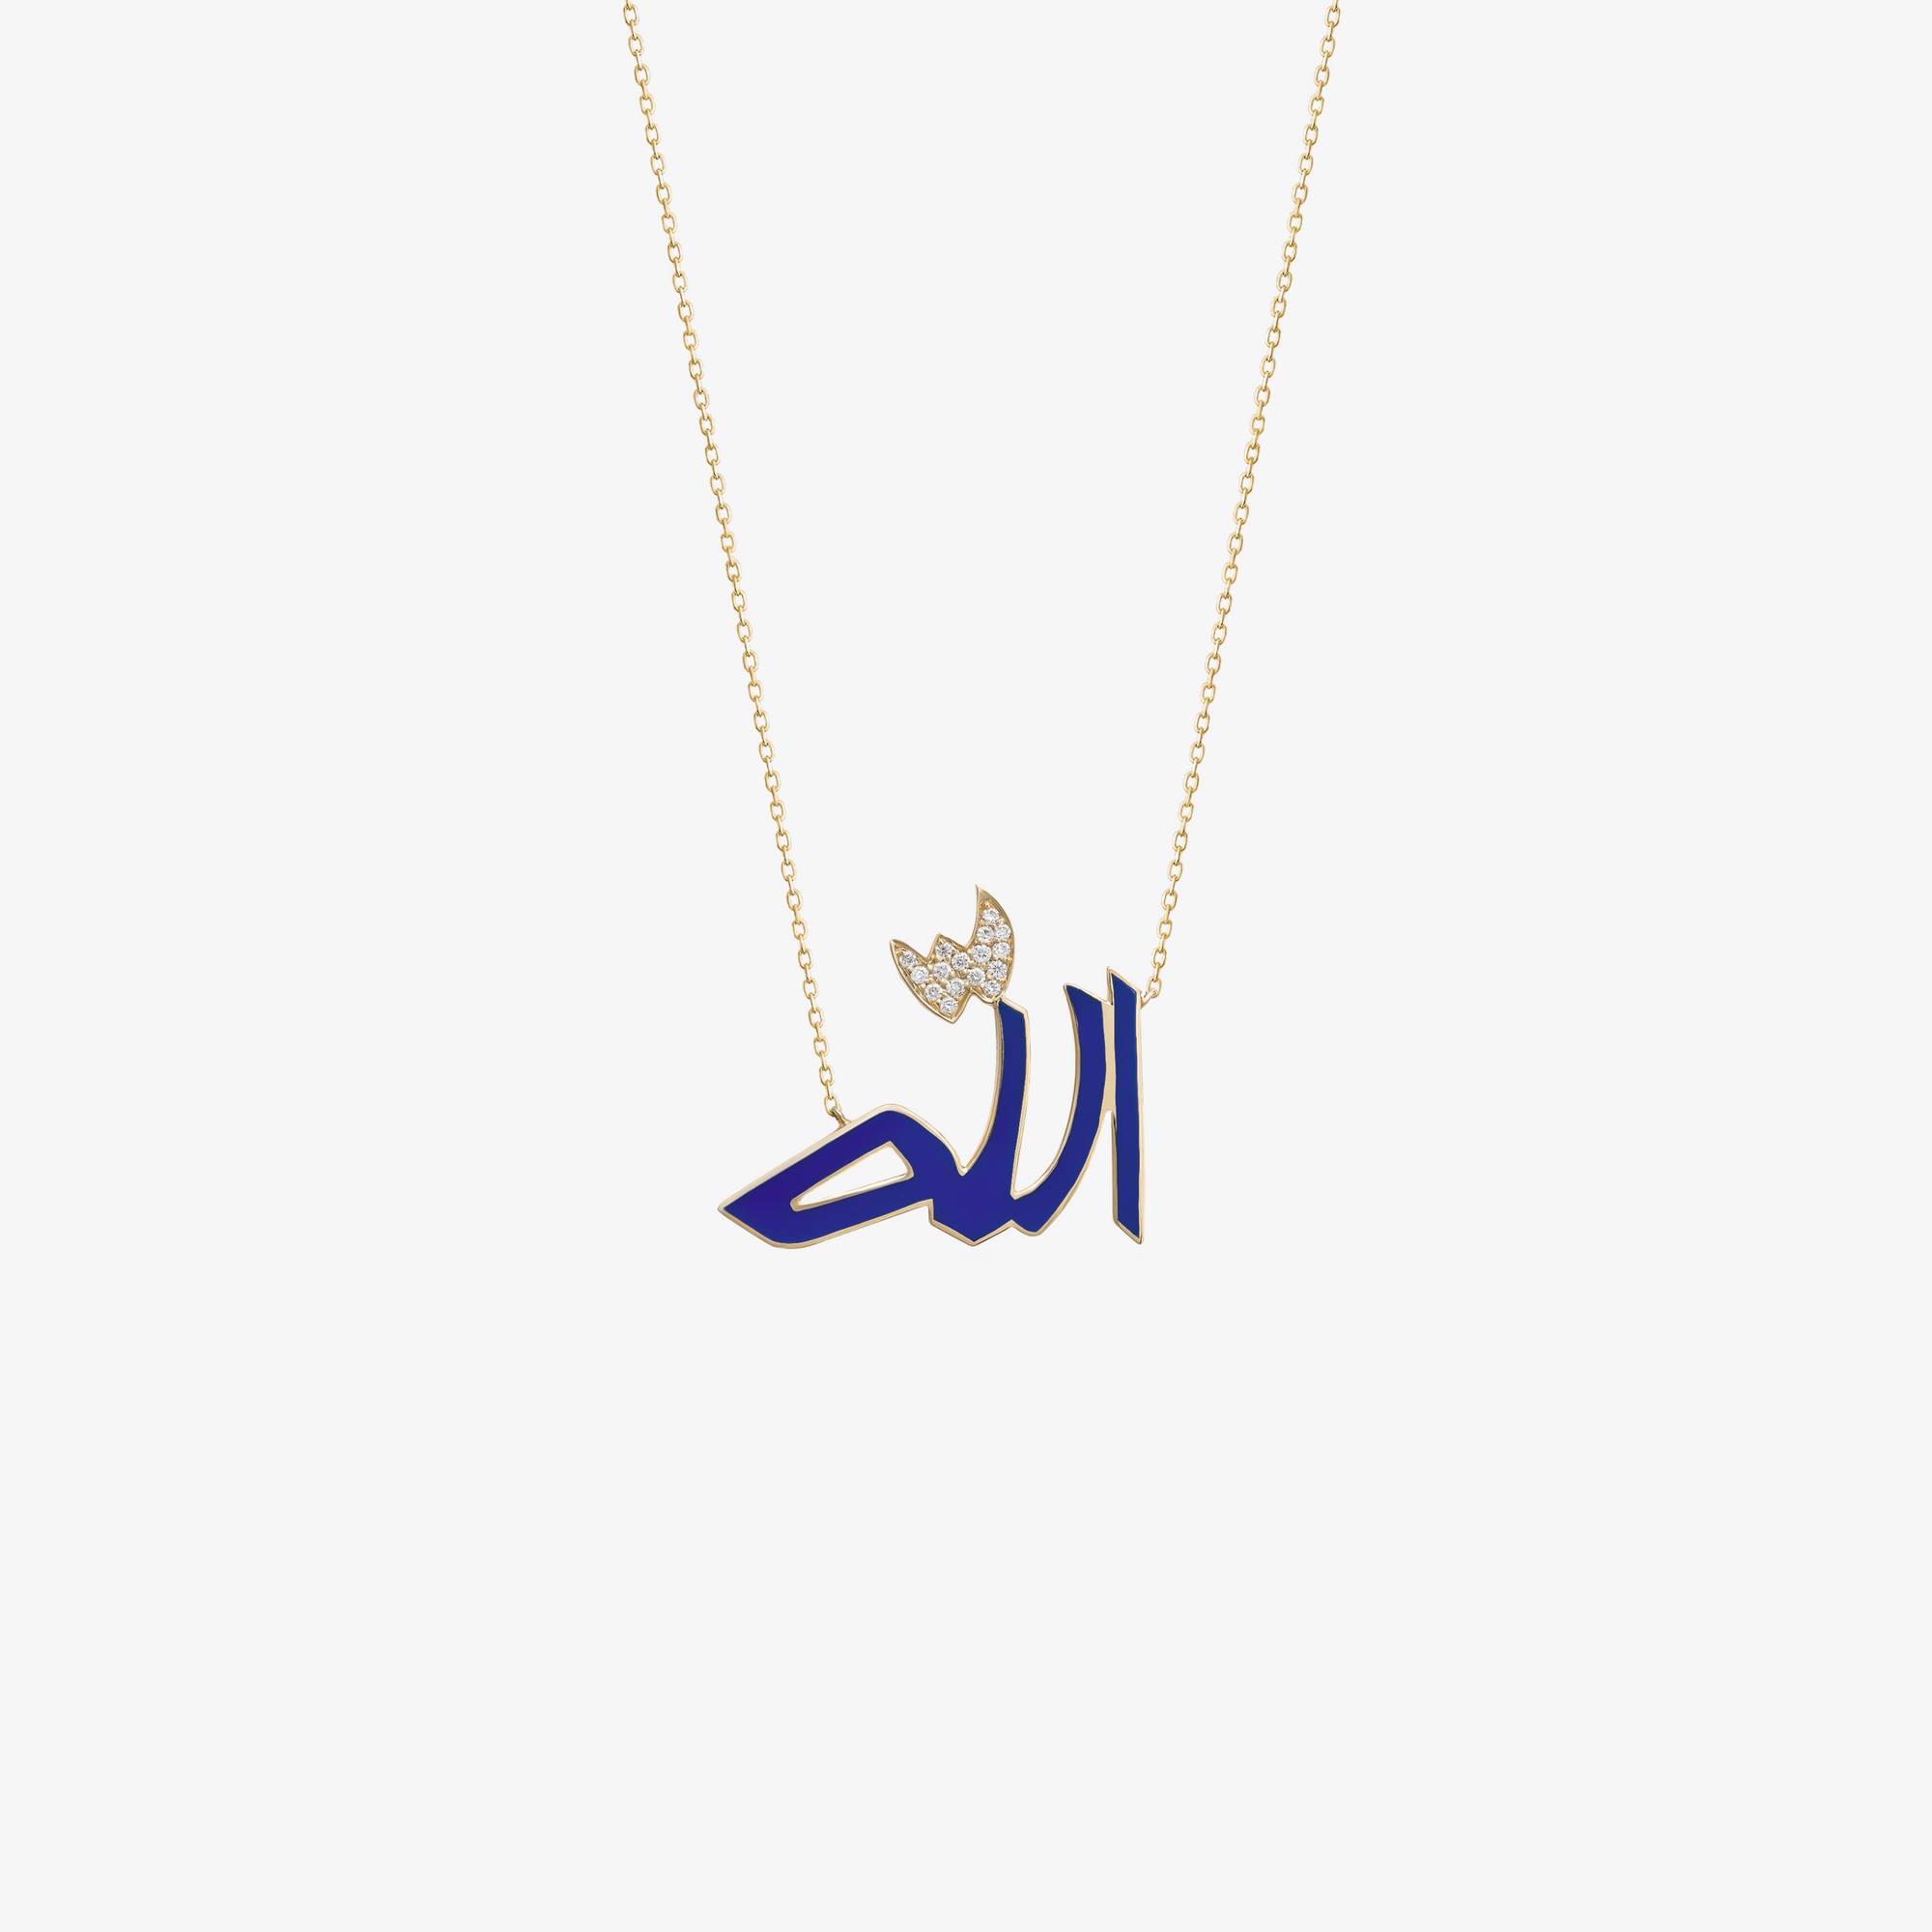 OULA - Gold & Enamel "Allah" Necklace. 3 cm